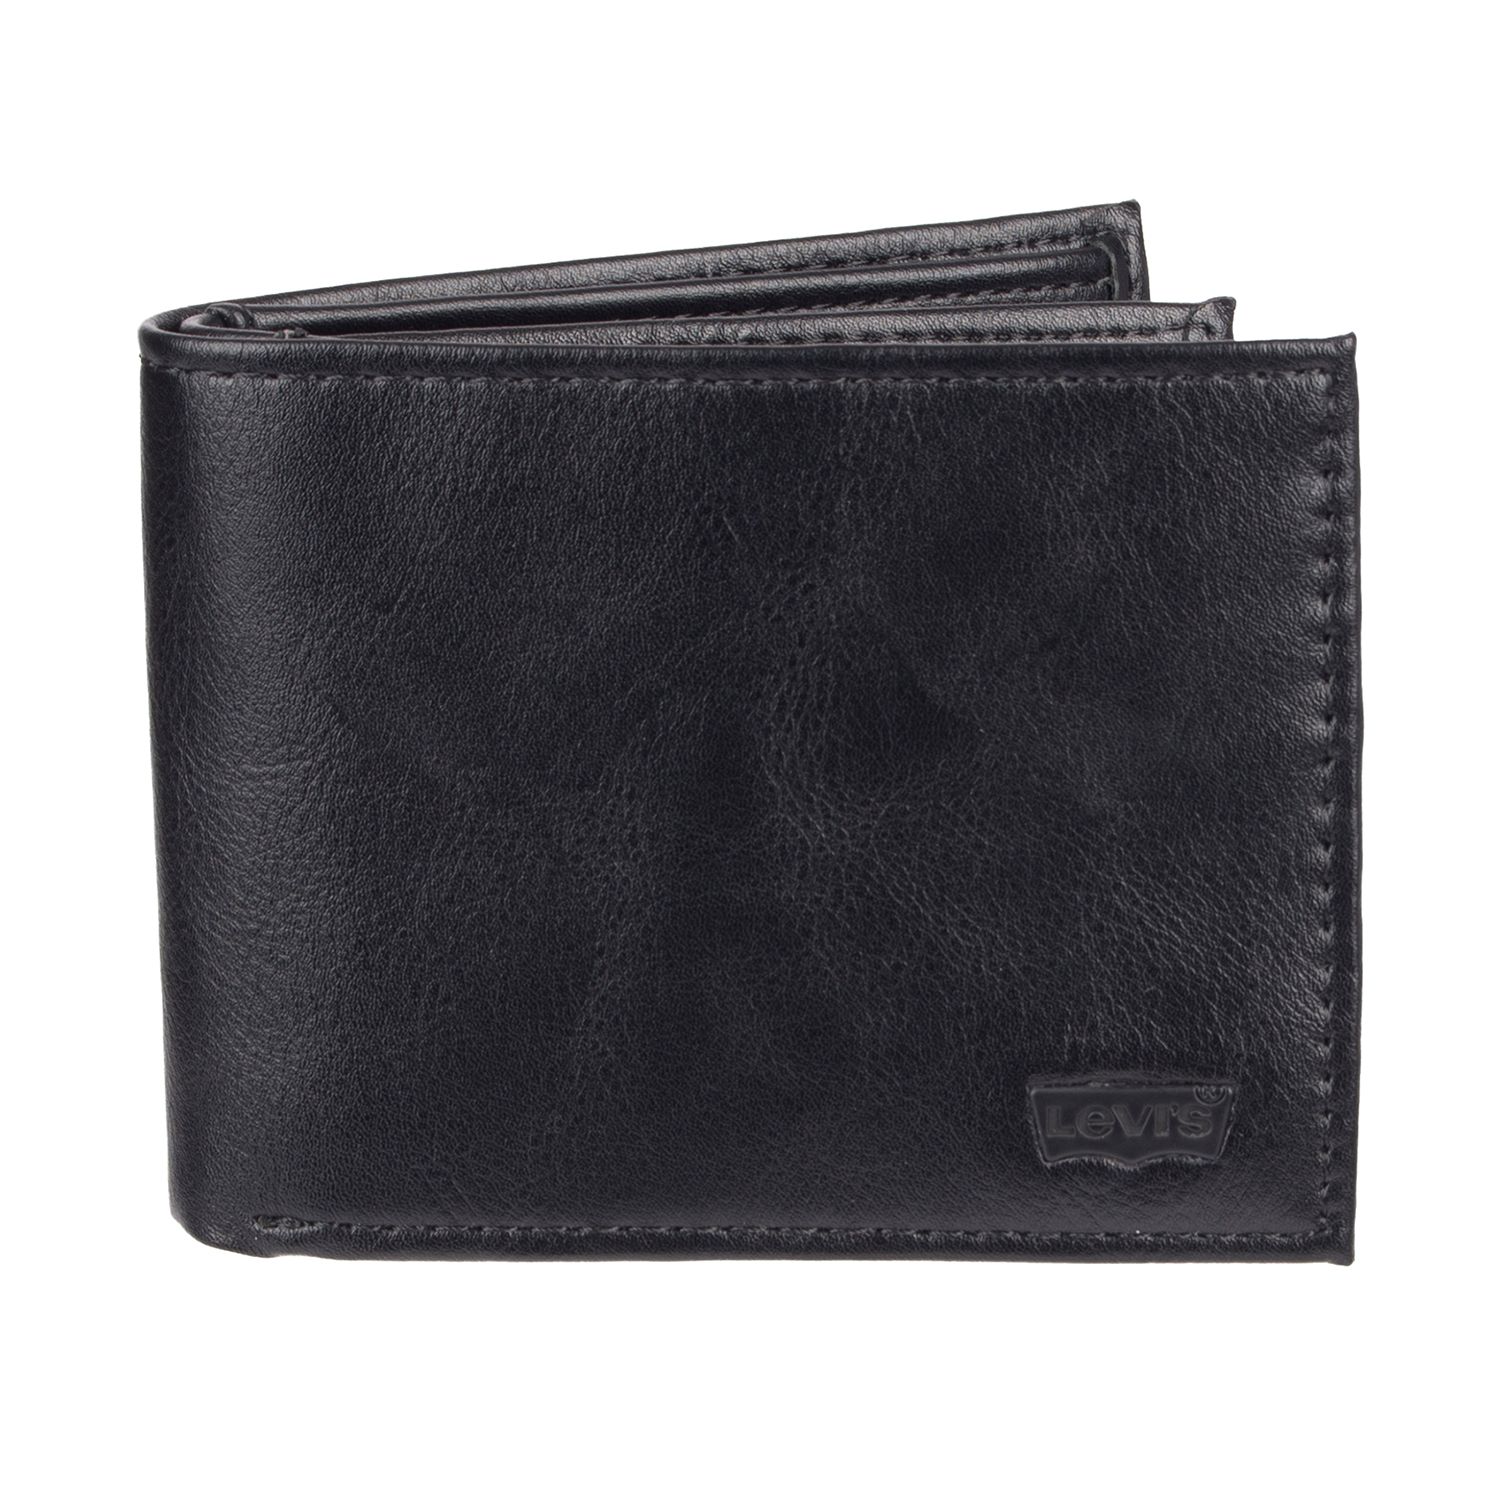 Image for Levi's Men's RFID-Blocking Extra-Capacity Black Slimfold Wallet at Kohl's.